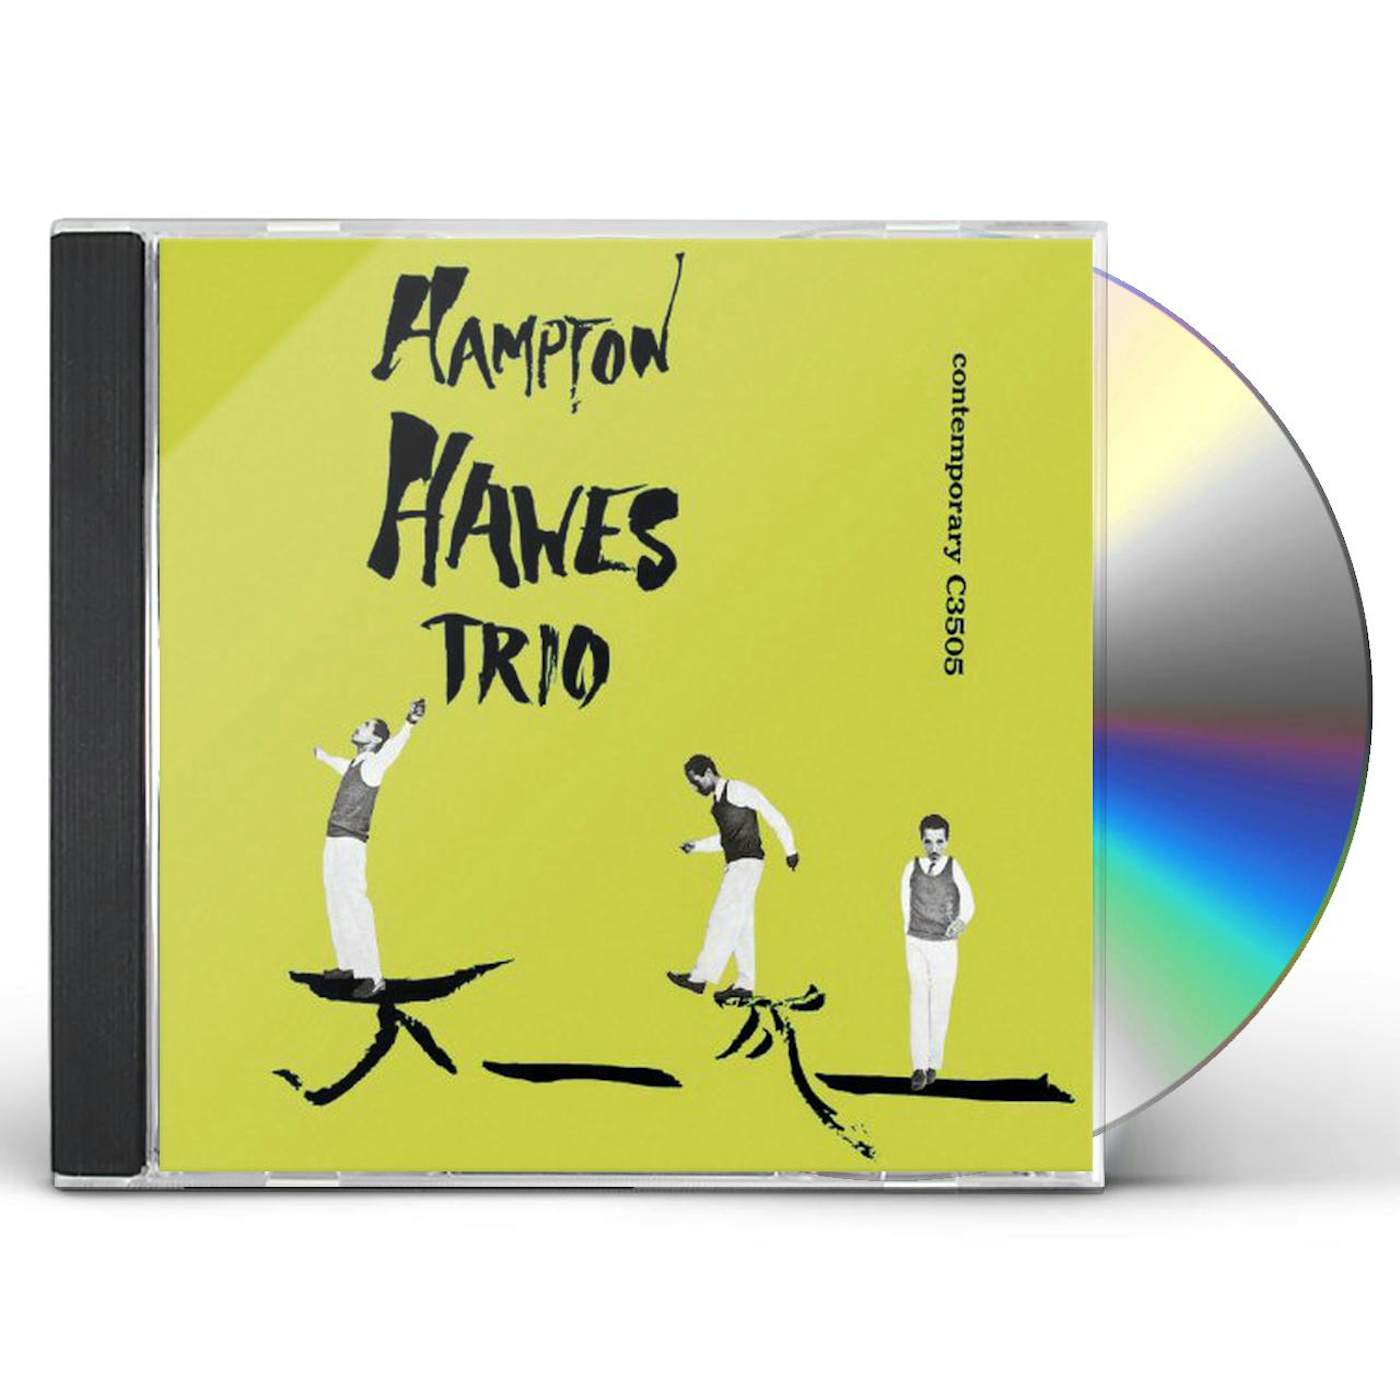 Hampton Hawes TRIO: VOL. 1 CD